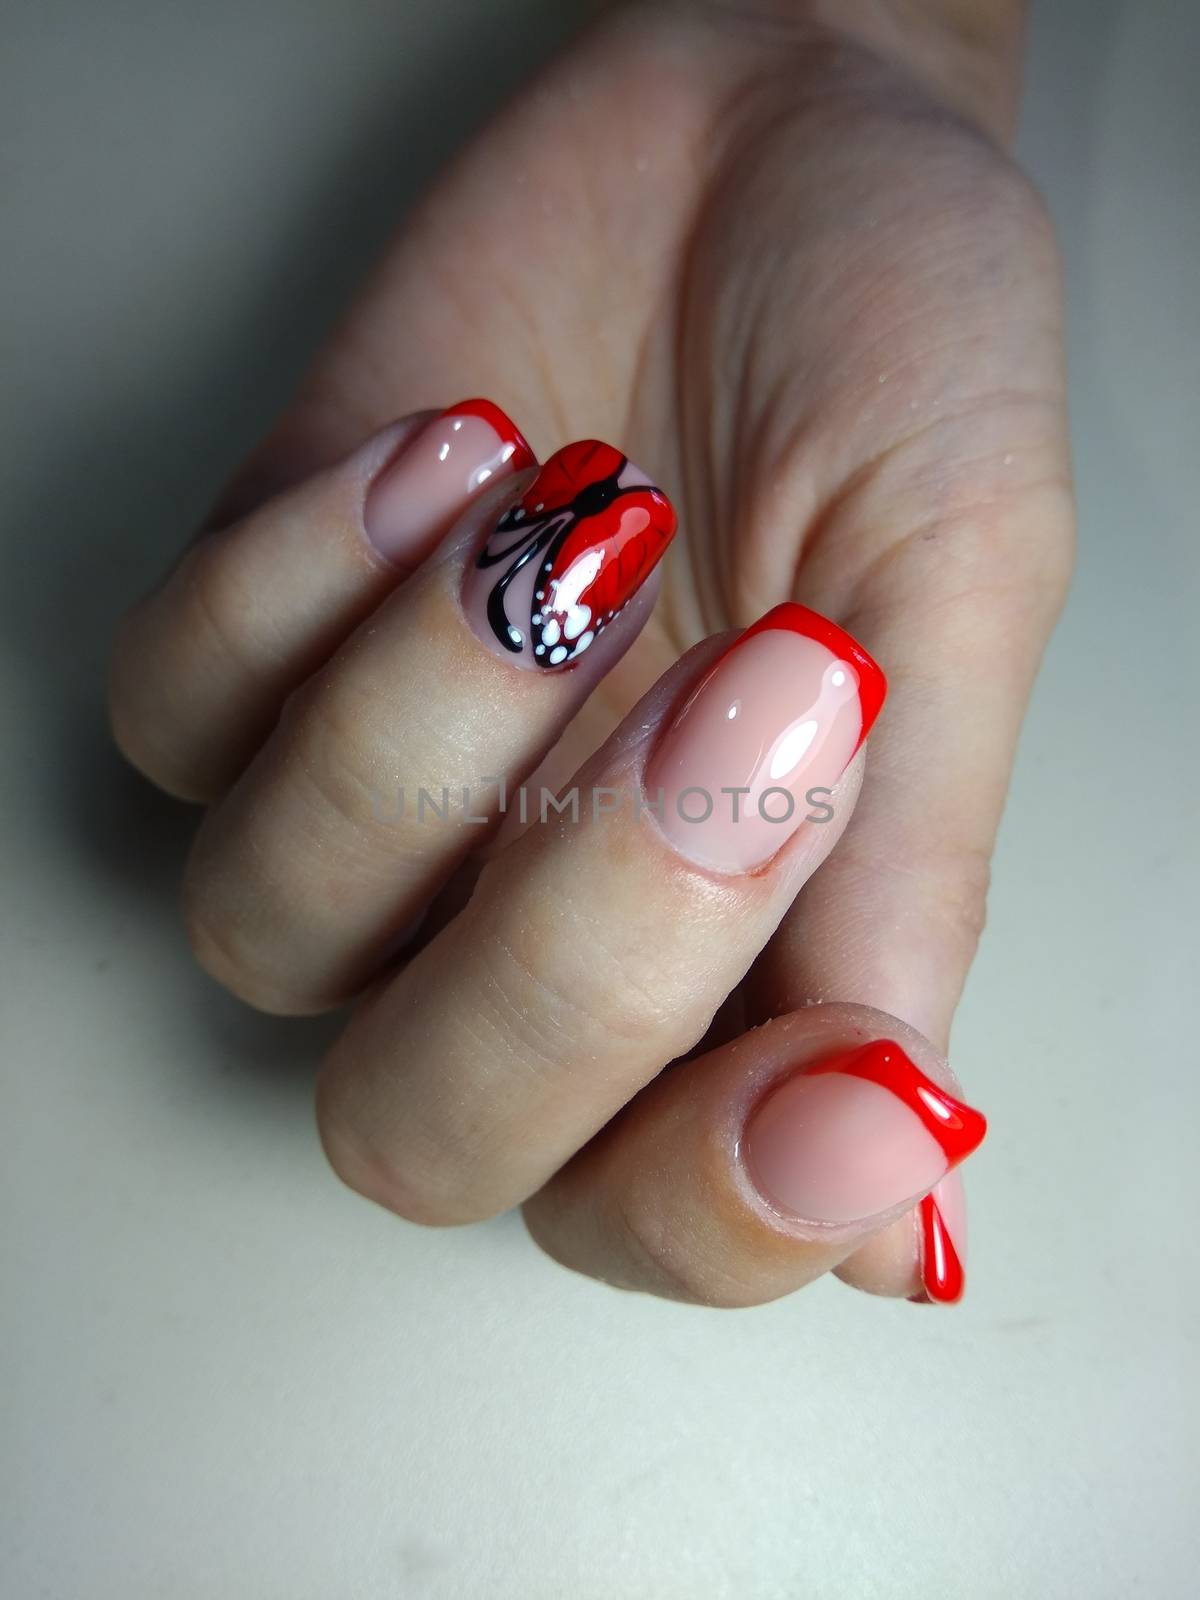 Beautiful manicure red butterfly by SmirMaxStock